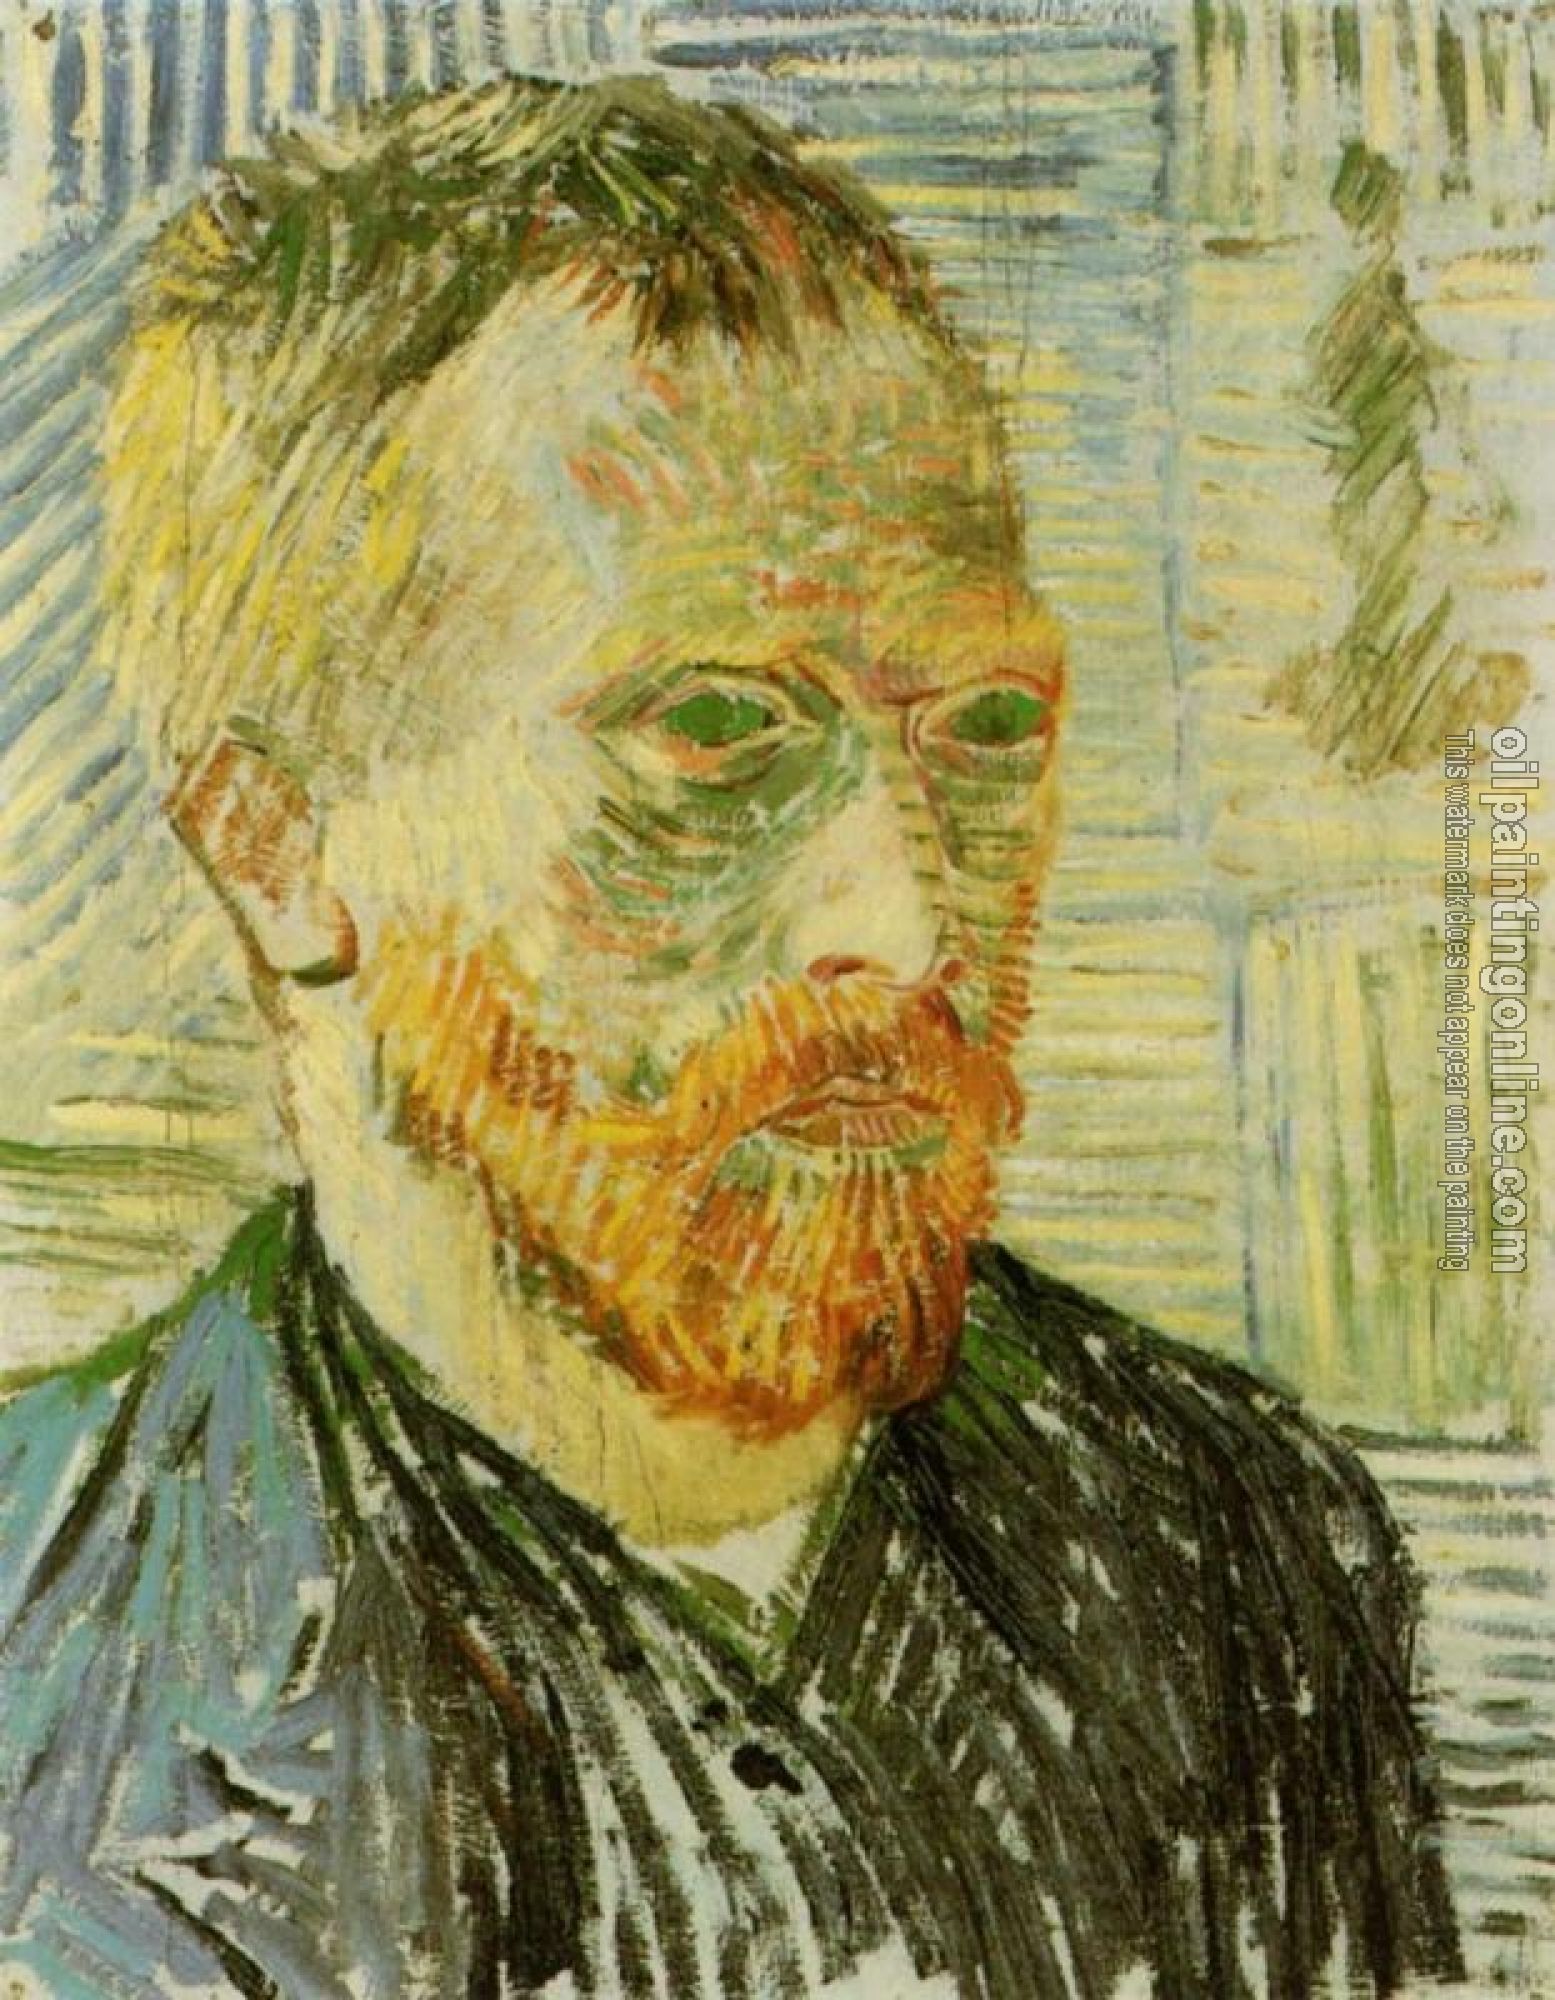 Gogh, Vincent van - Self Portrait with a Japanese Print